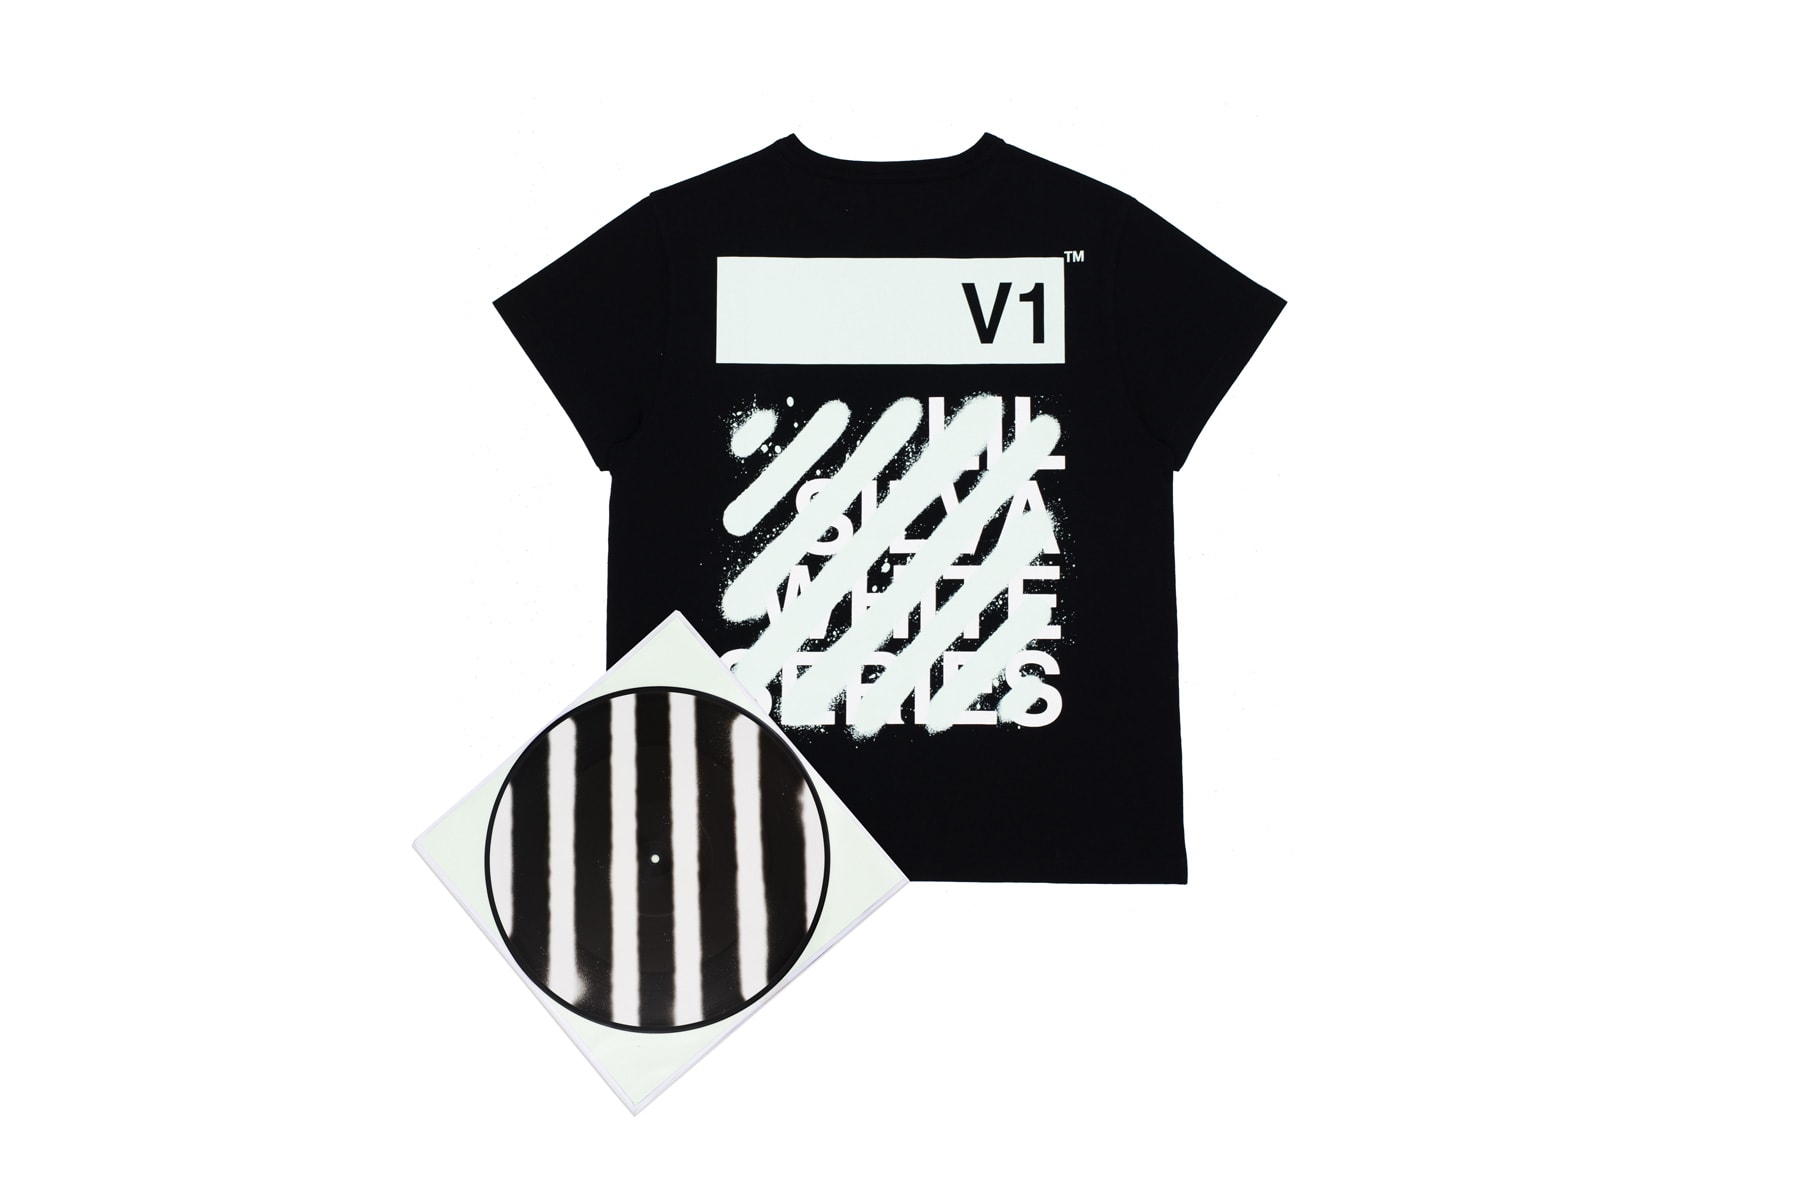 OFF-WHITE Lil Silva 2016 Fall Winter Collaboration Vinyl Music T-shirt Tees Virgil Abloh